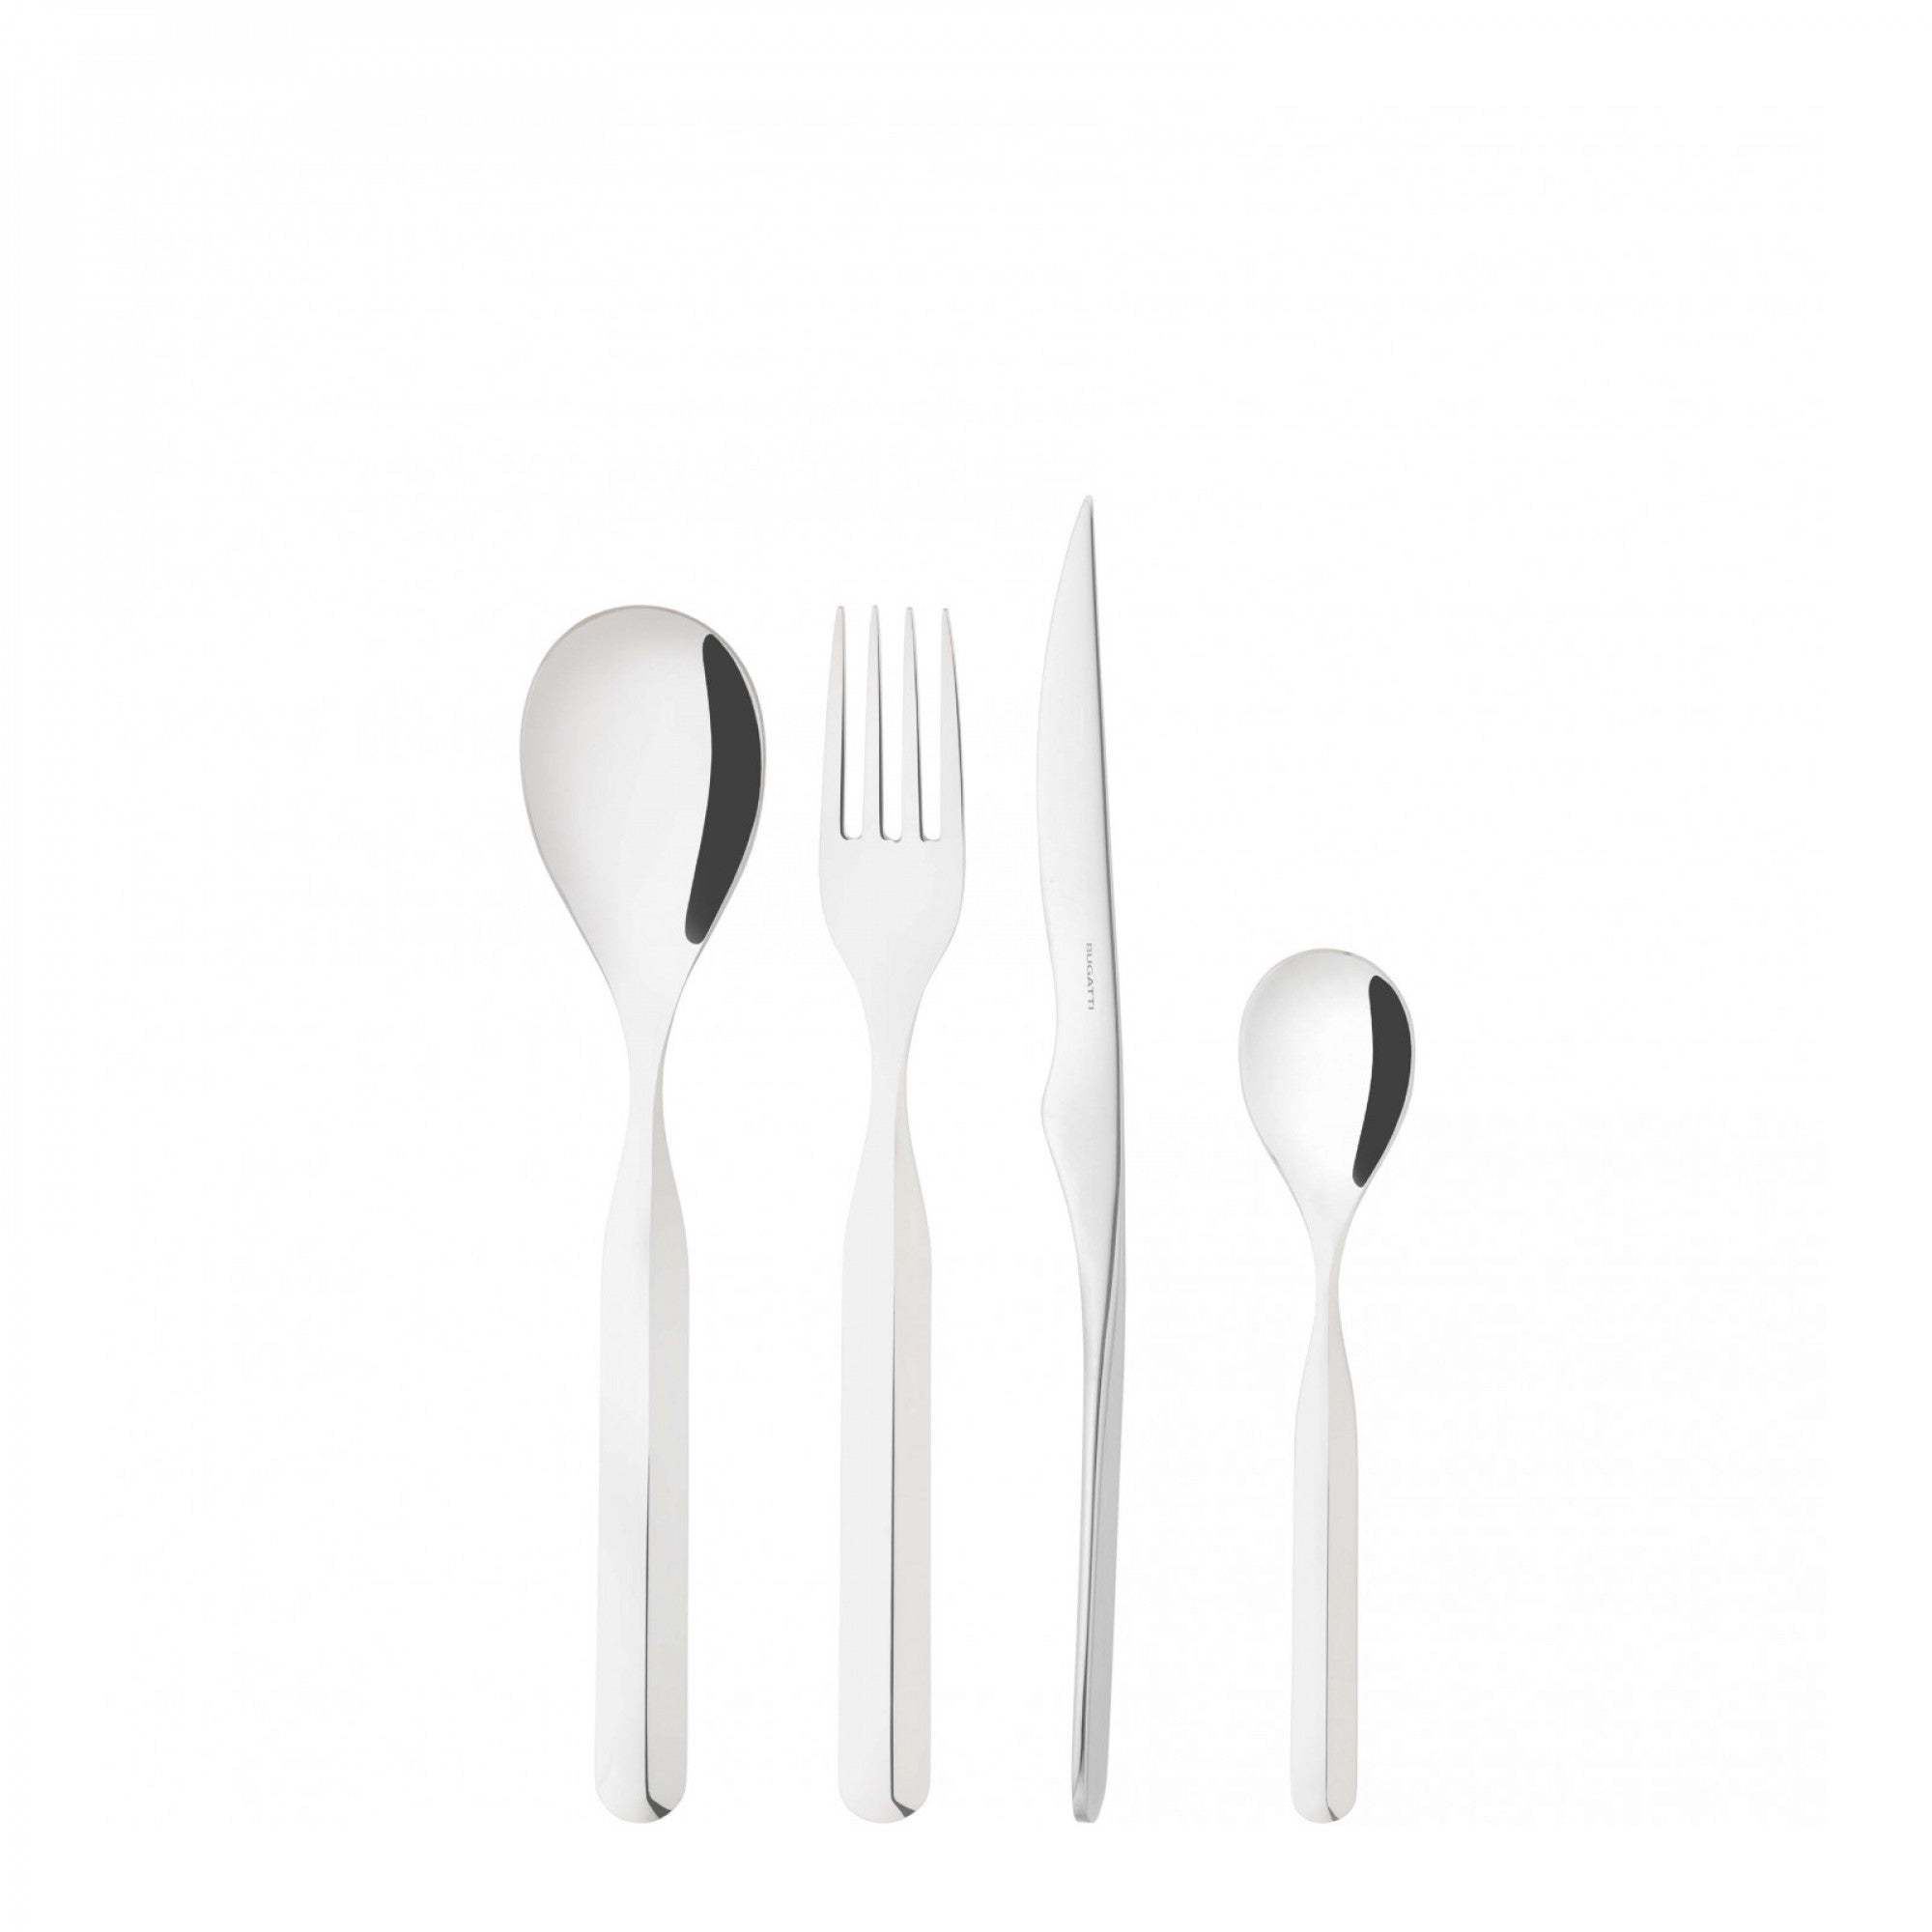 BUGATTI, Vidal, 24-piece cutlery set in 18/10 stainless steel